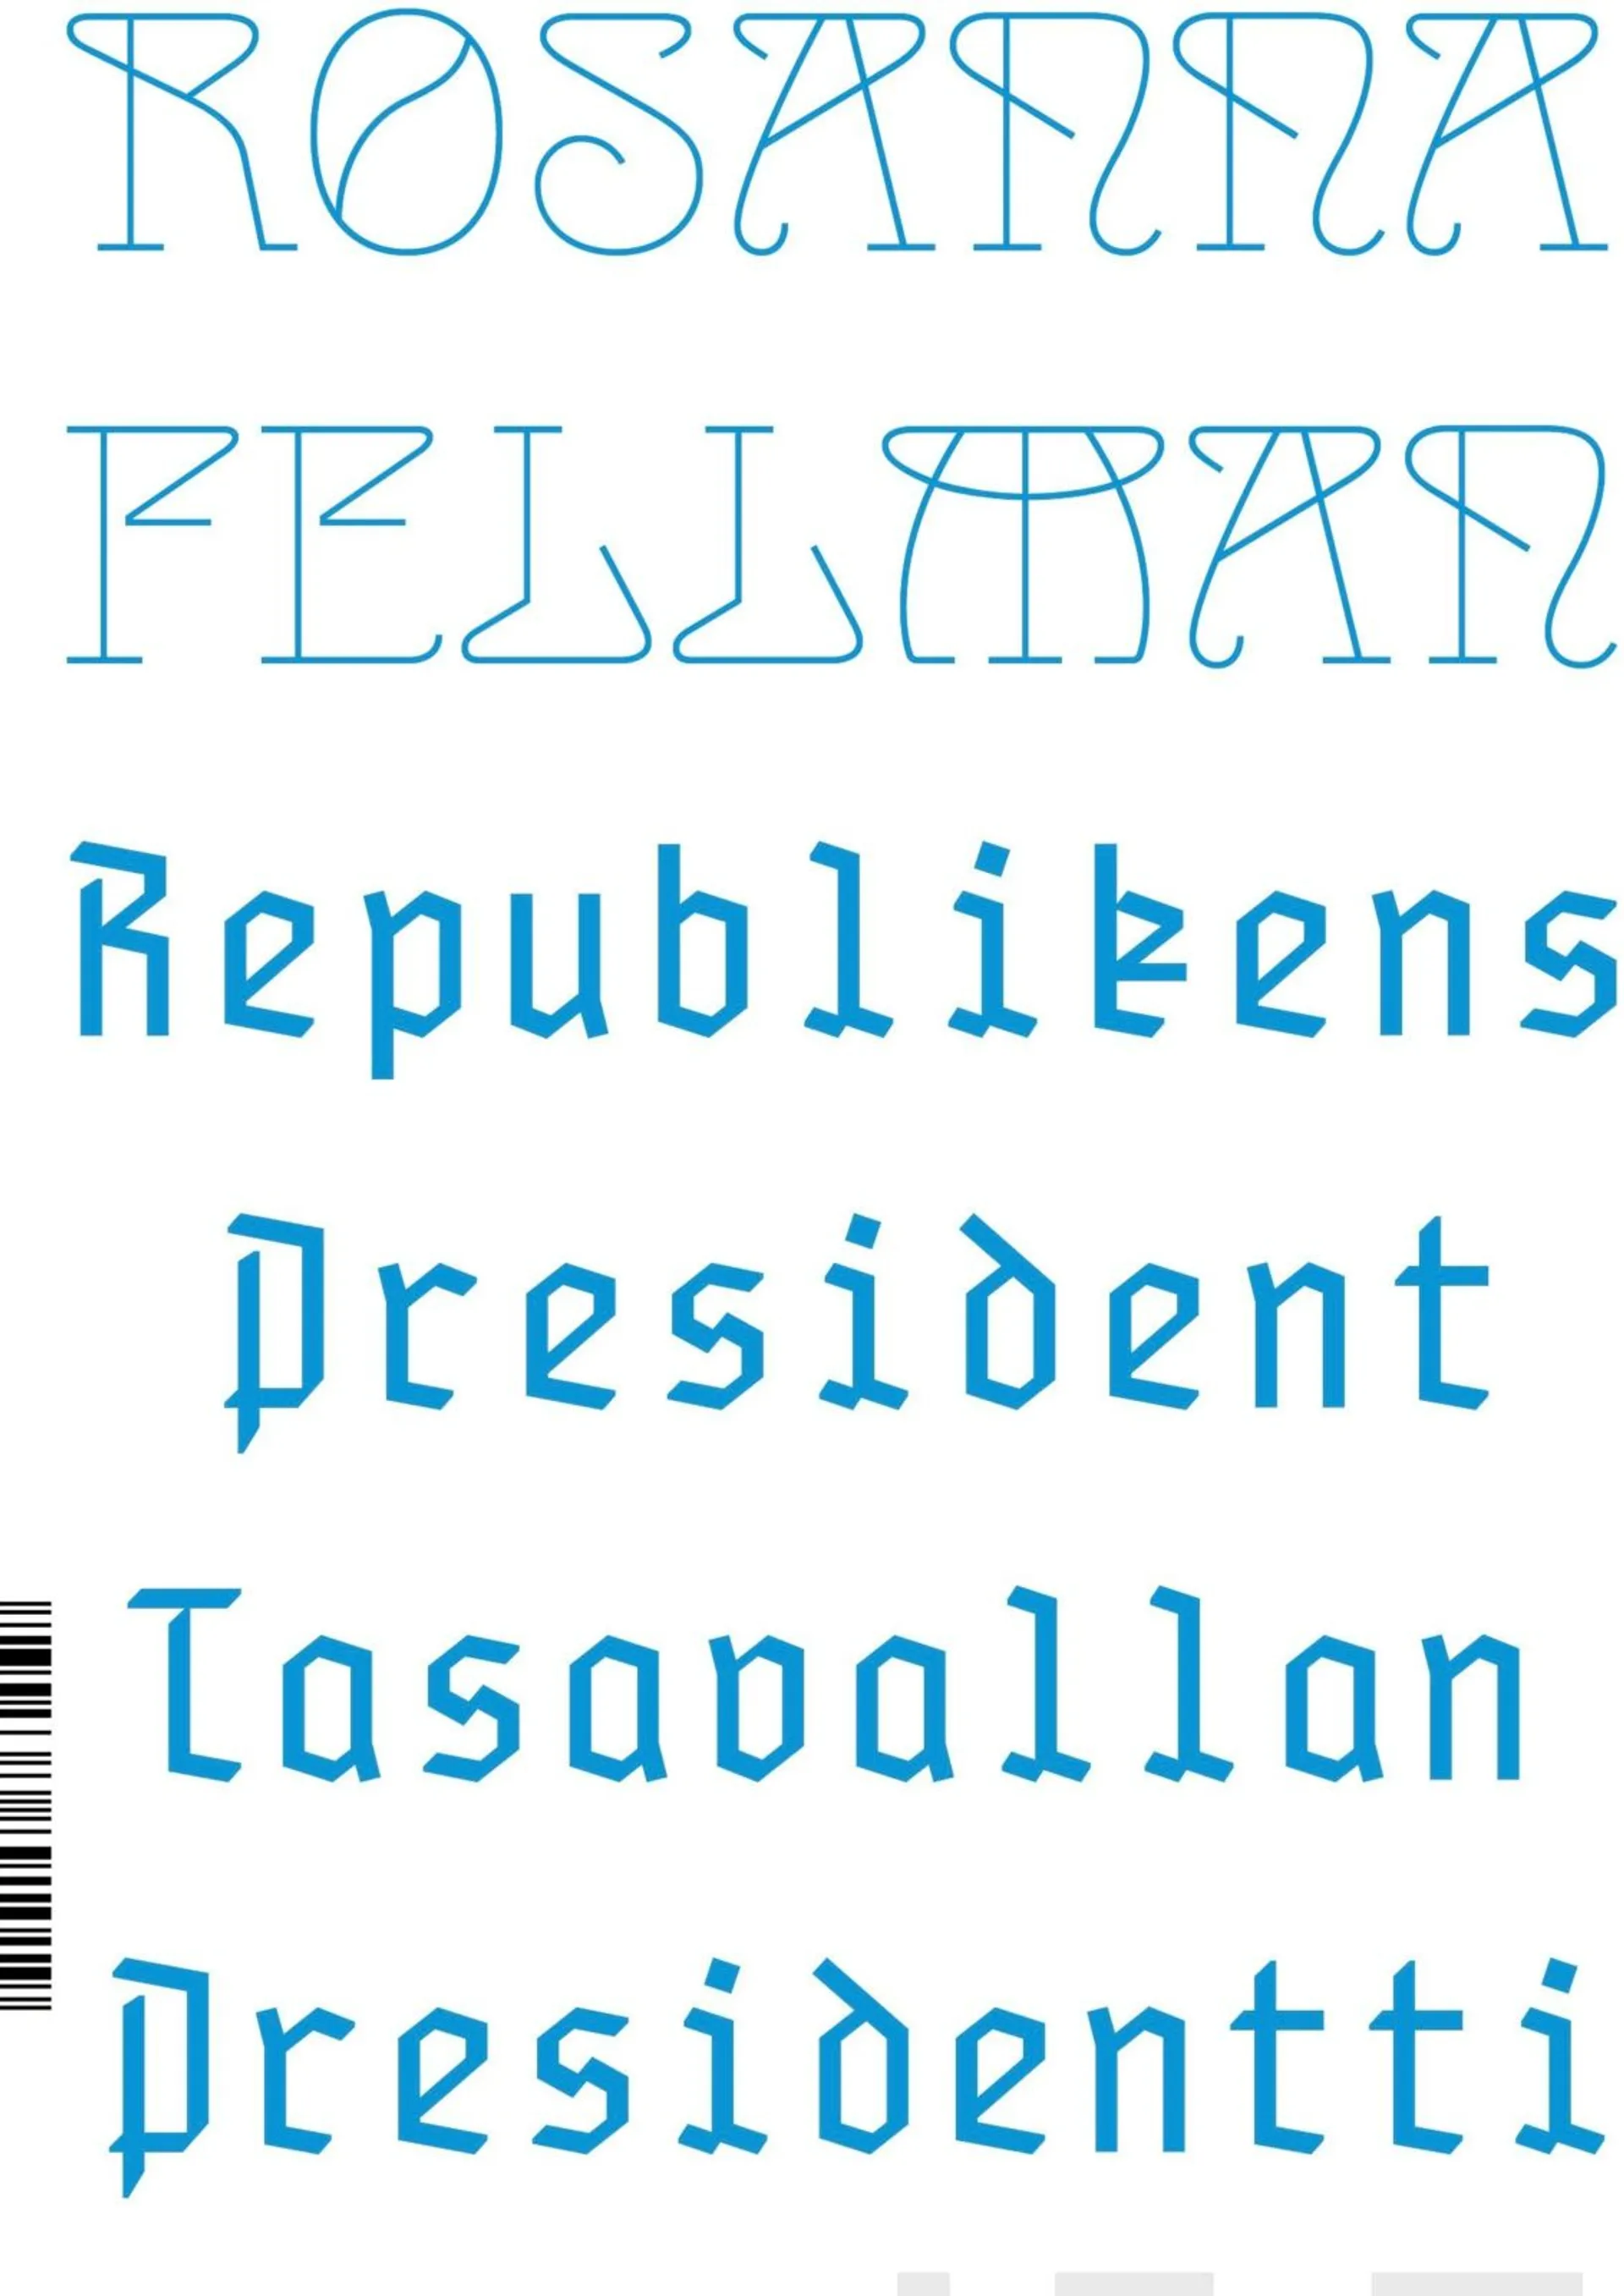 Fellman, Republikens president - Tasavallan presidentti